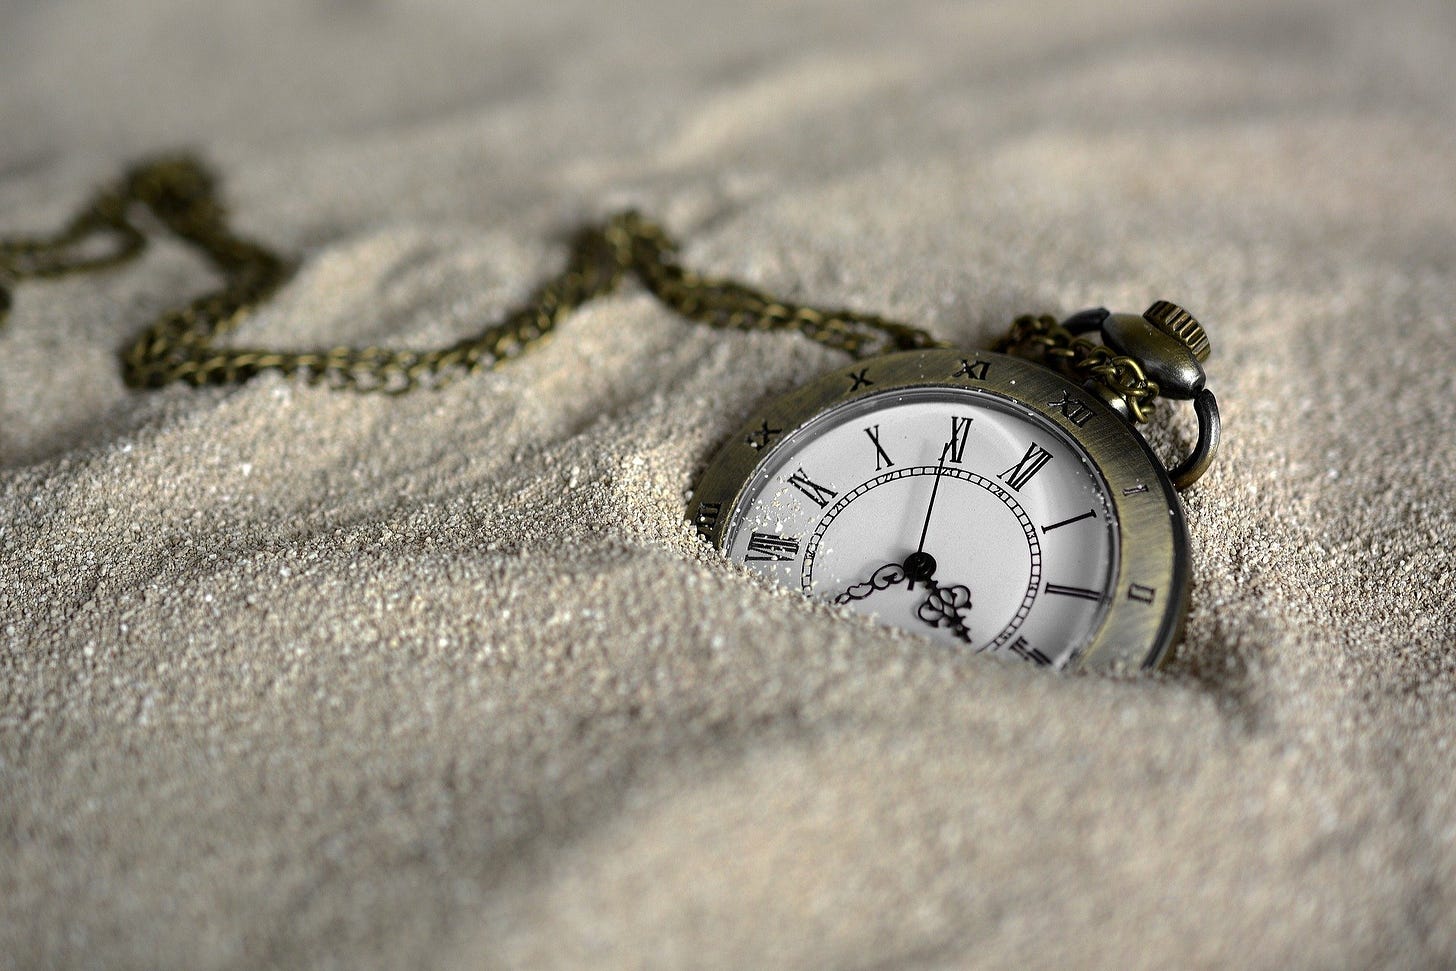 Pocket watch half buried in sand